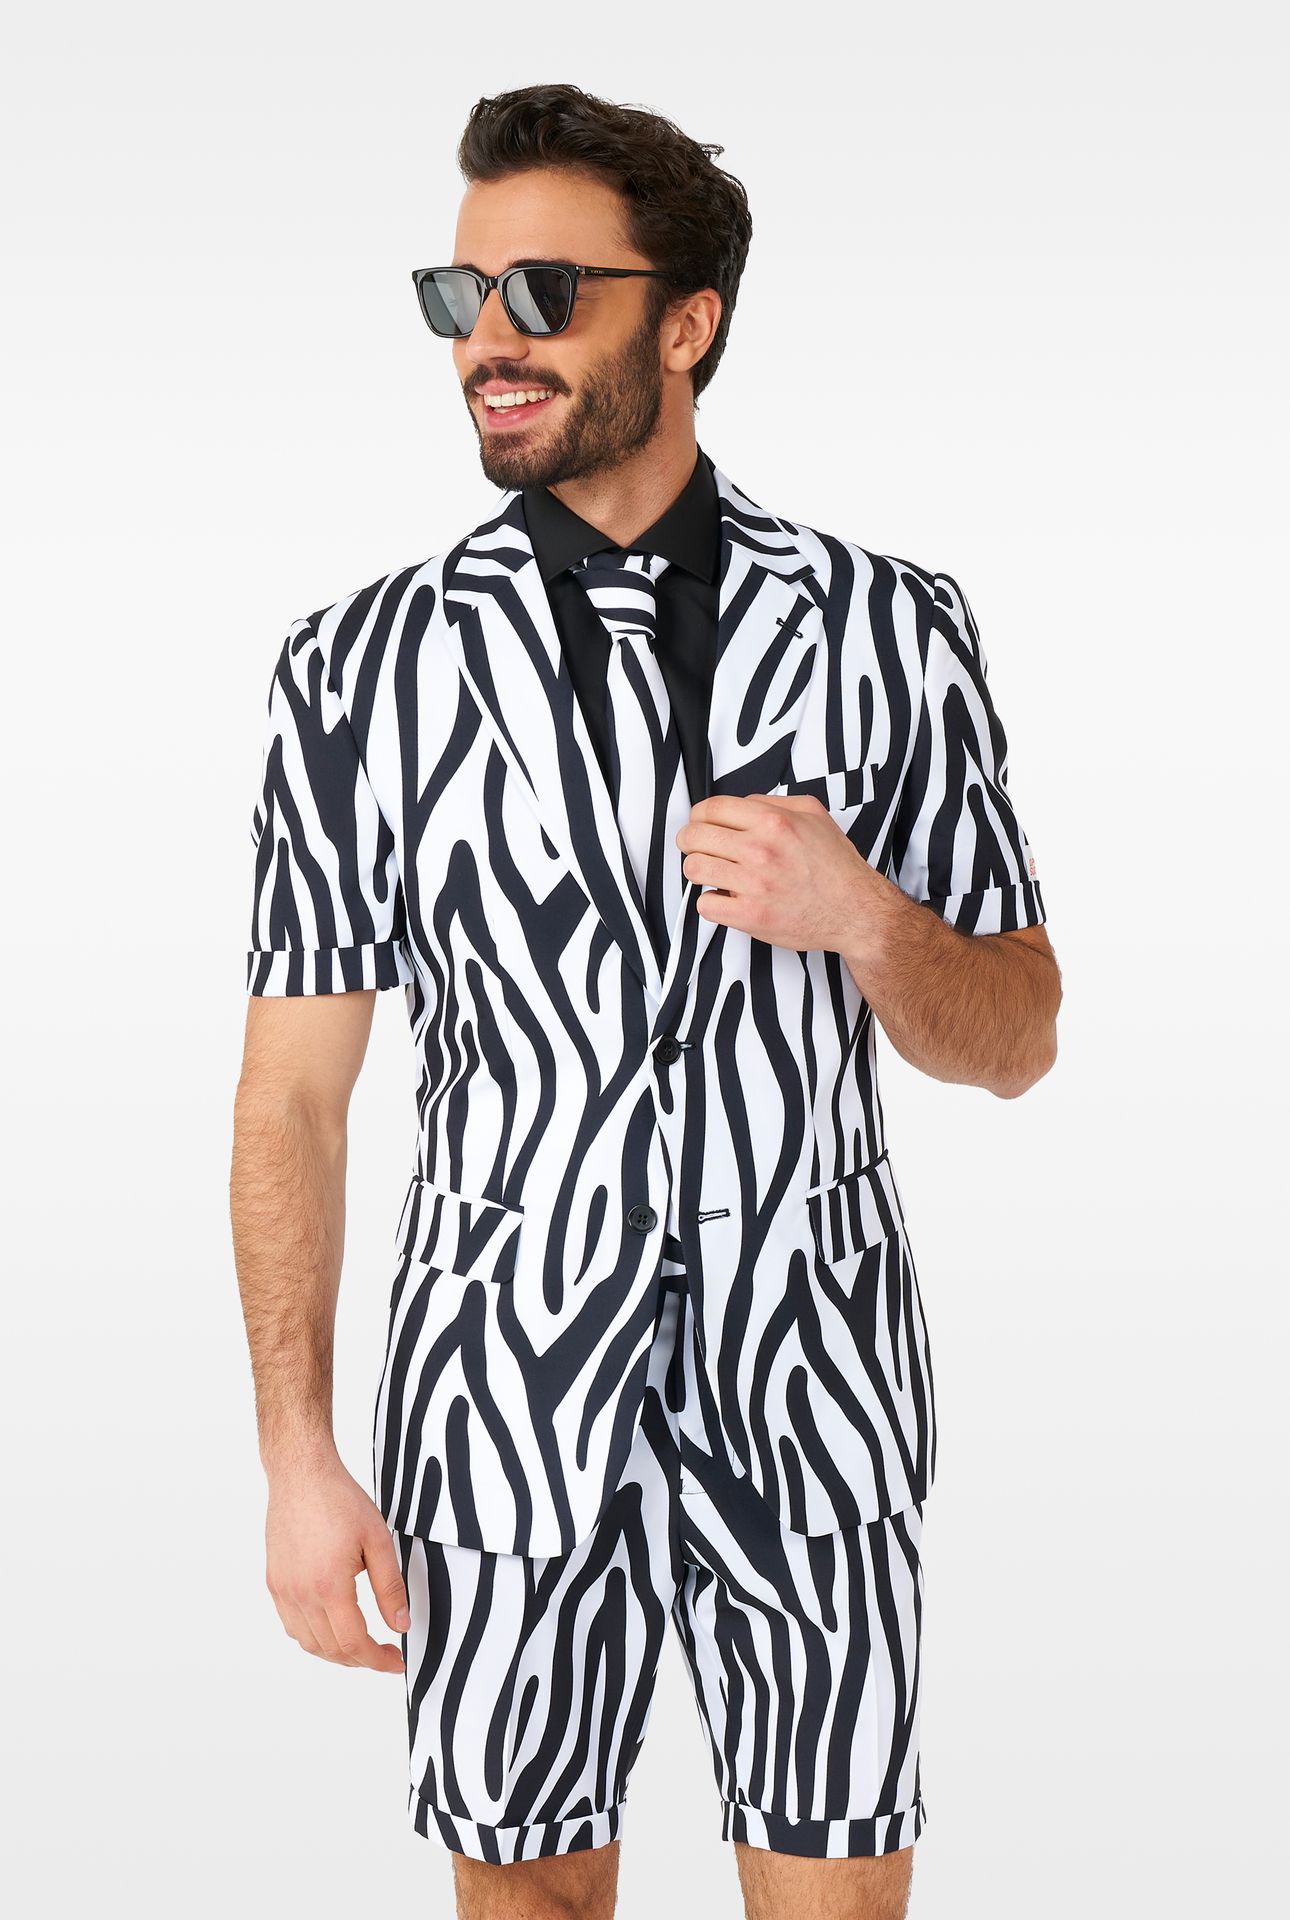 Zomer Zazzy Zebra suit Heren Opposuits